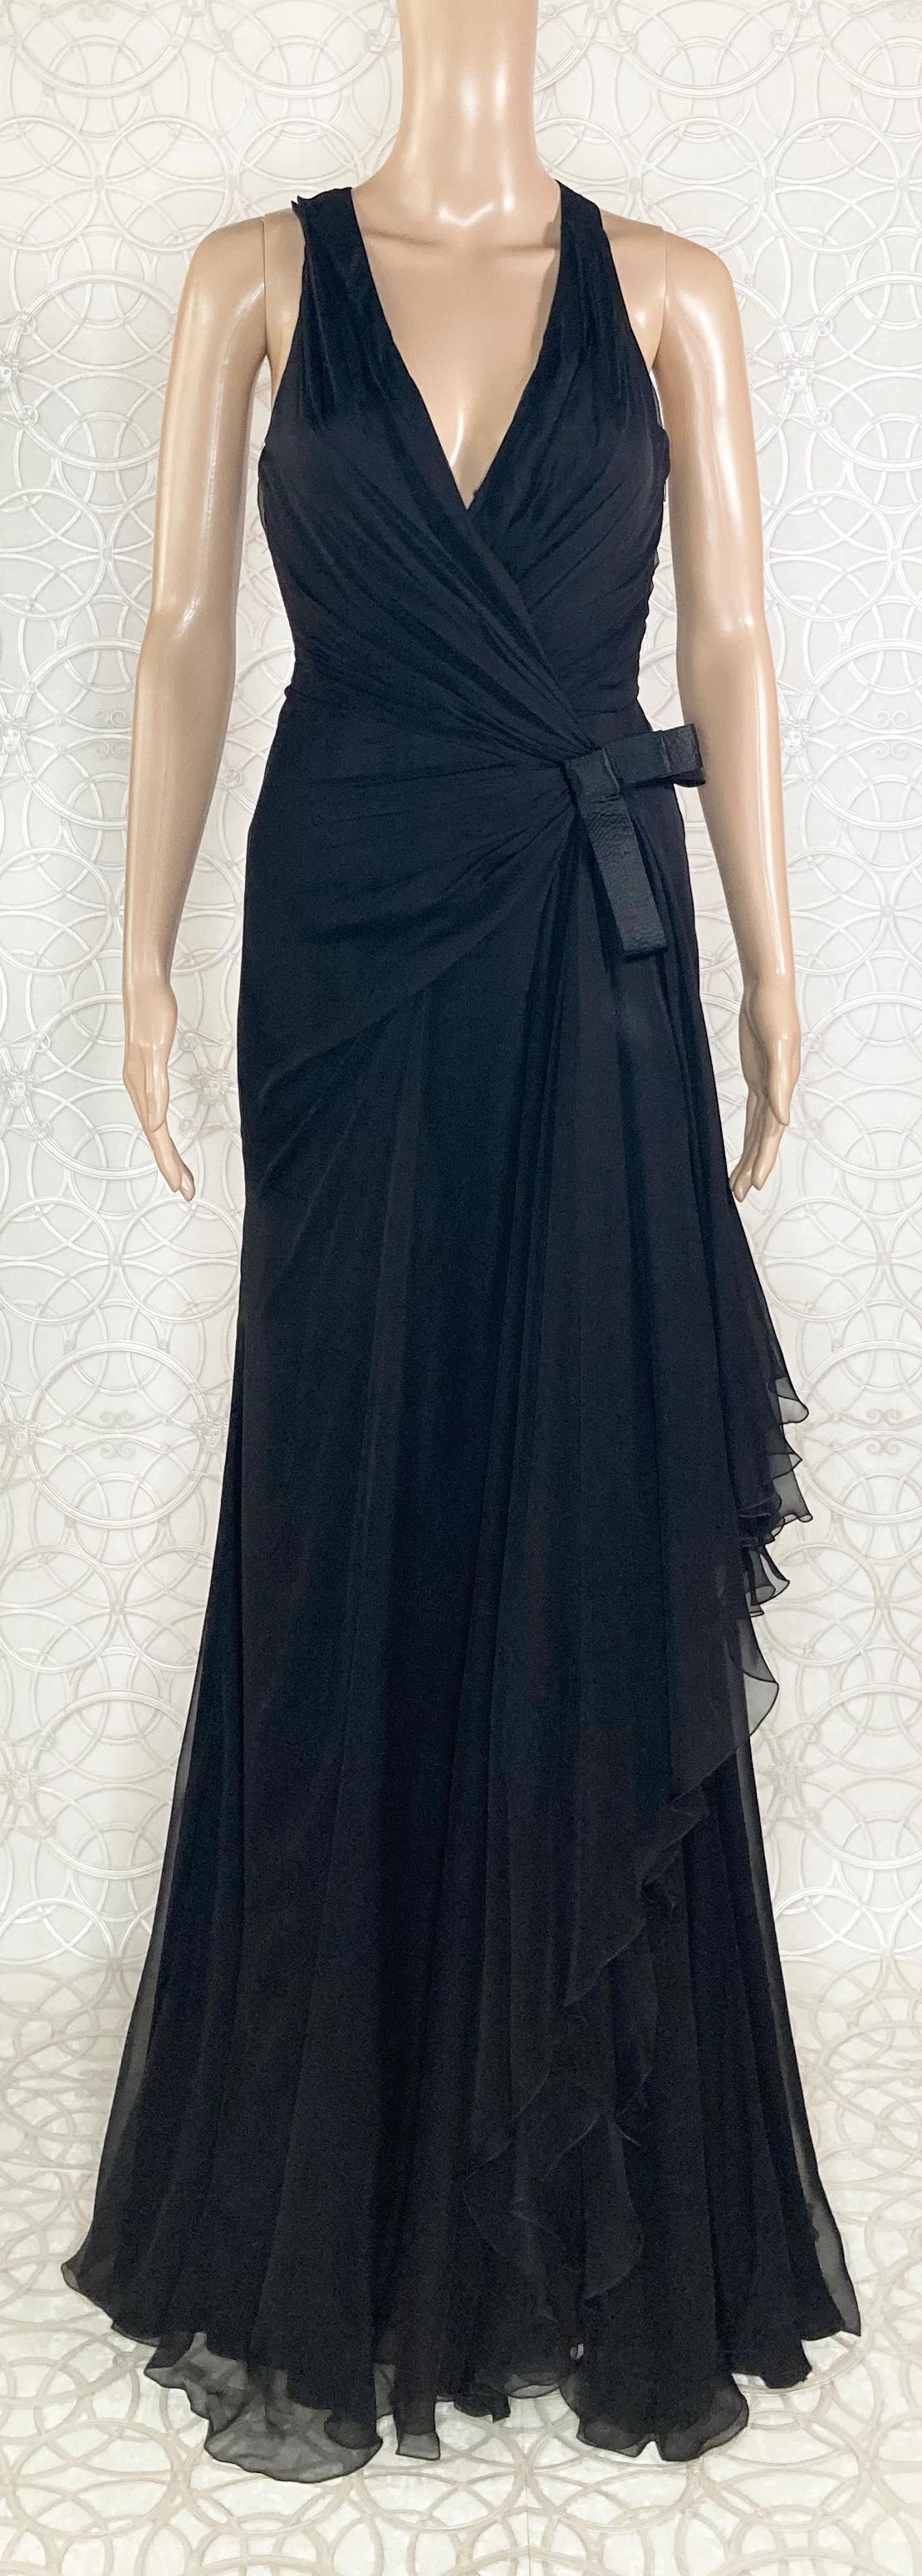 VERSACE BLACK SILK VANITAS DETAIL LONG GOWN Dress 38 -2 For Sale 4